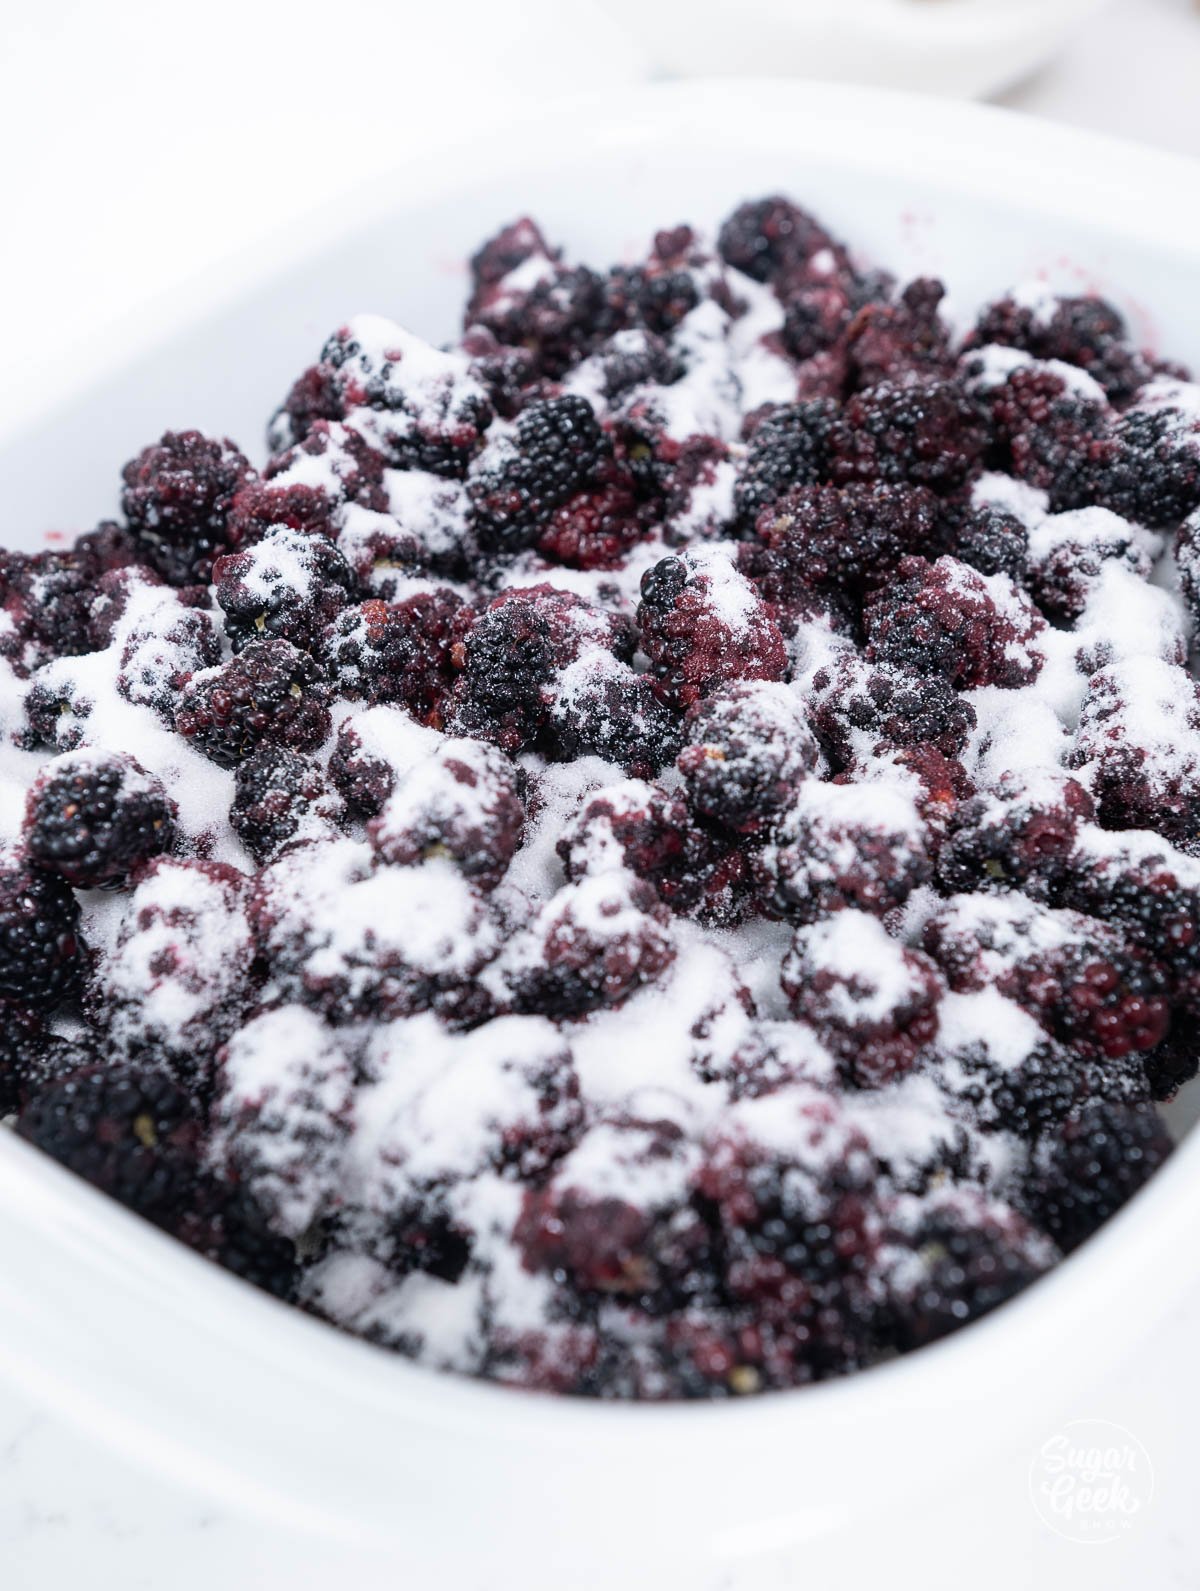 sugar sprinkled over blackberries in a white baking dish